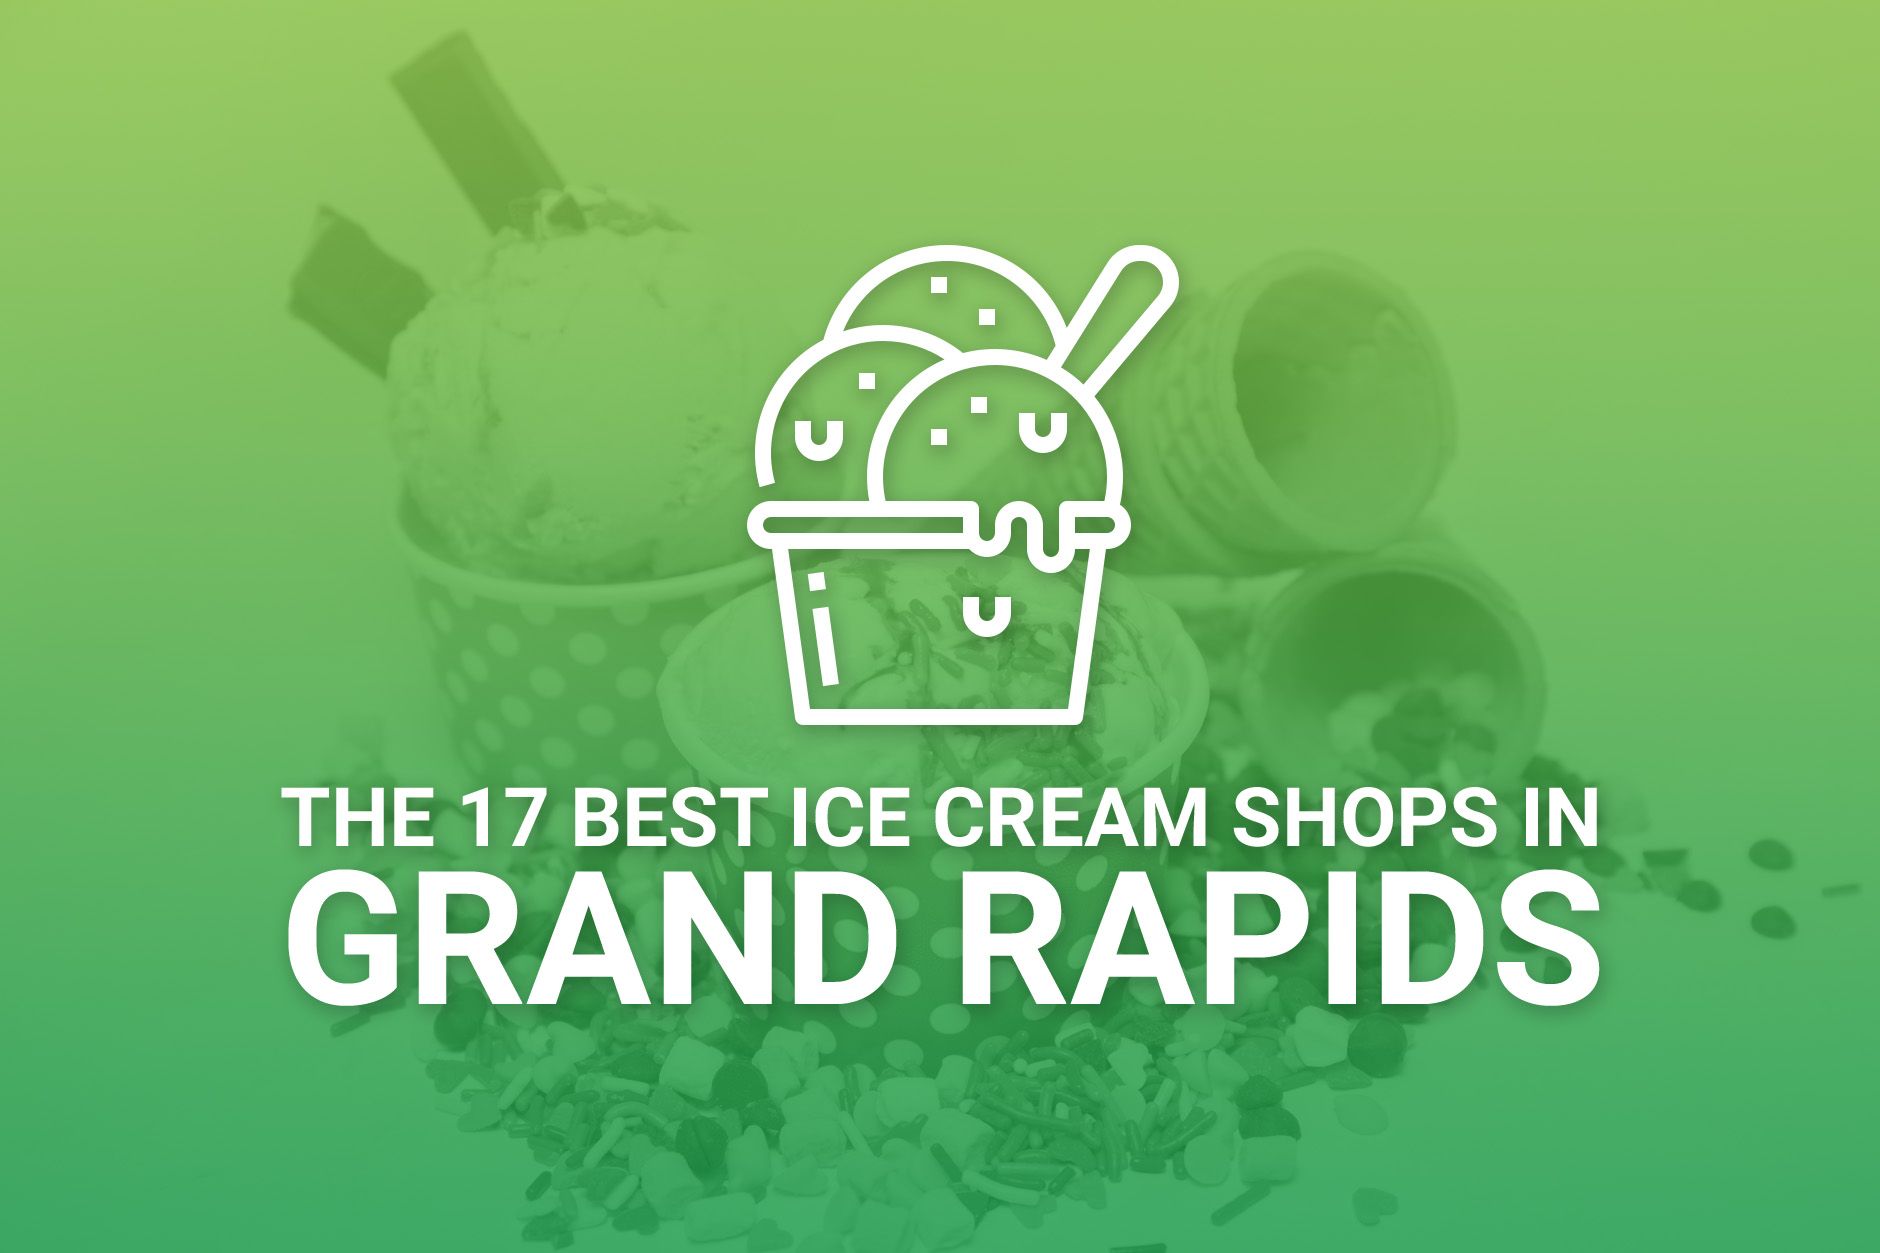 Best Grand Rapids Ice Cream Shops